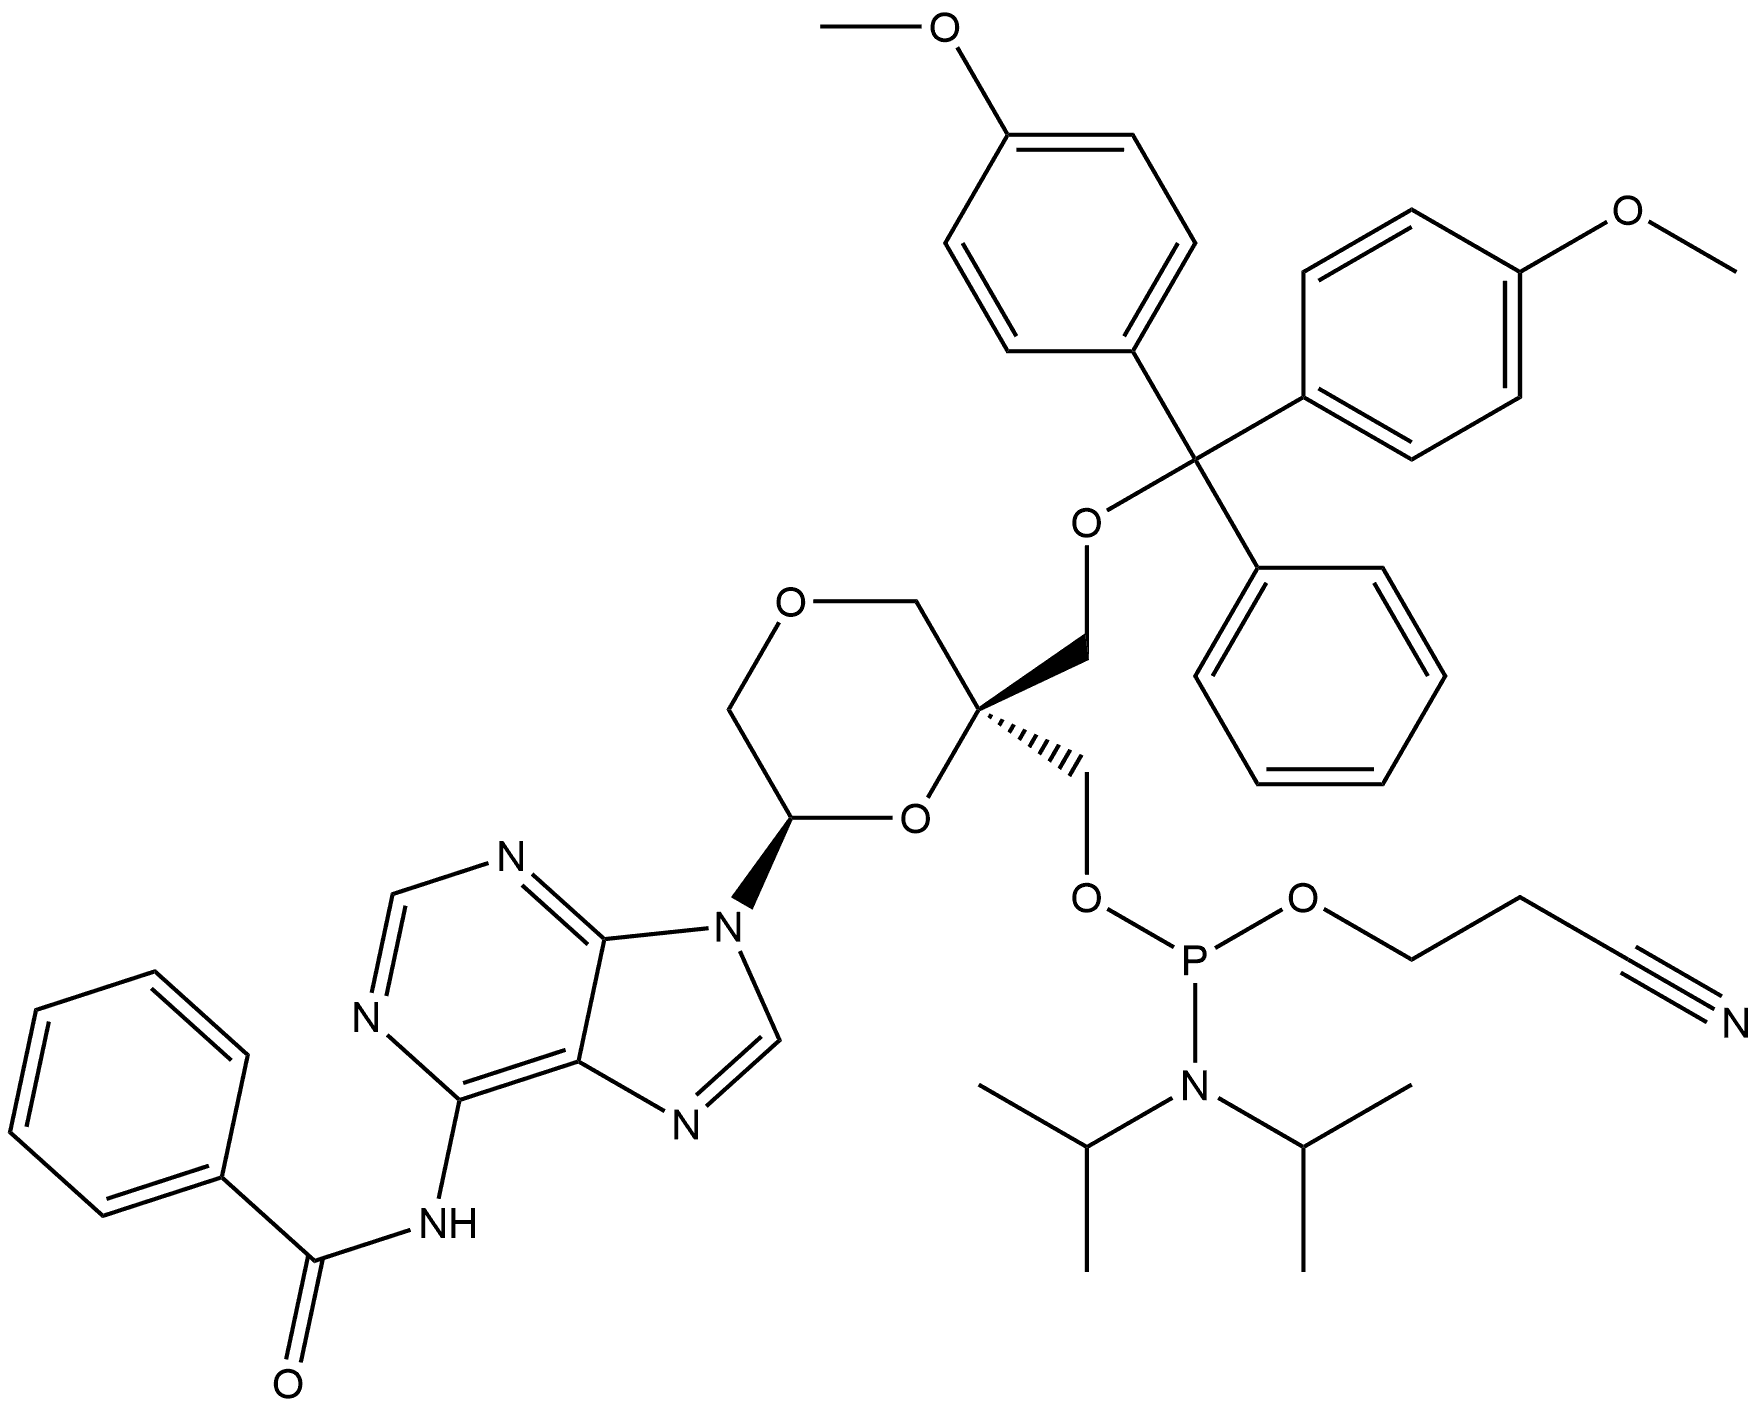 [(2S,6R)-6-[6-(Benzoylamino)-9H-purin-9-yl]-2-[[bis(4-methoxyphenyl)phenylmethoxy]methyl]-1,4-dioxan-2-yl]methyl 2-cyanoethyl N,N-bis(1-methylethyl)phosphoramidite|